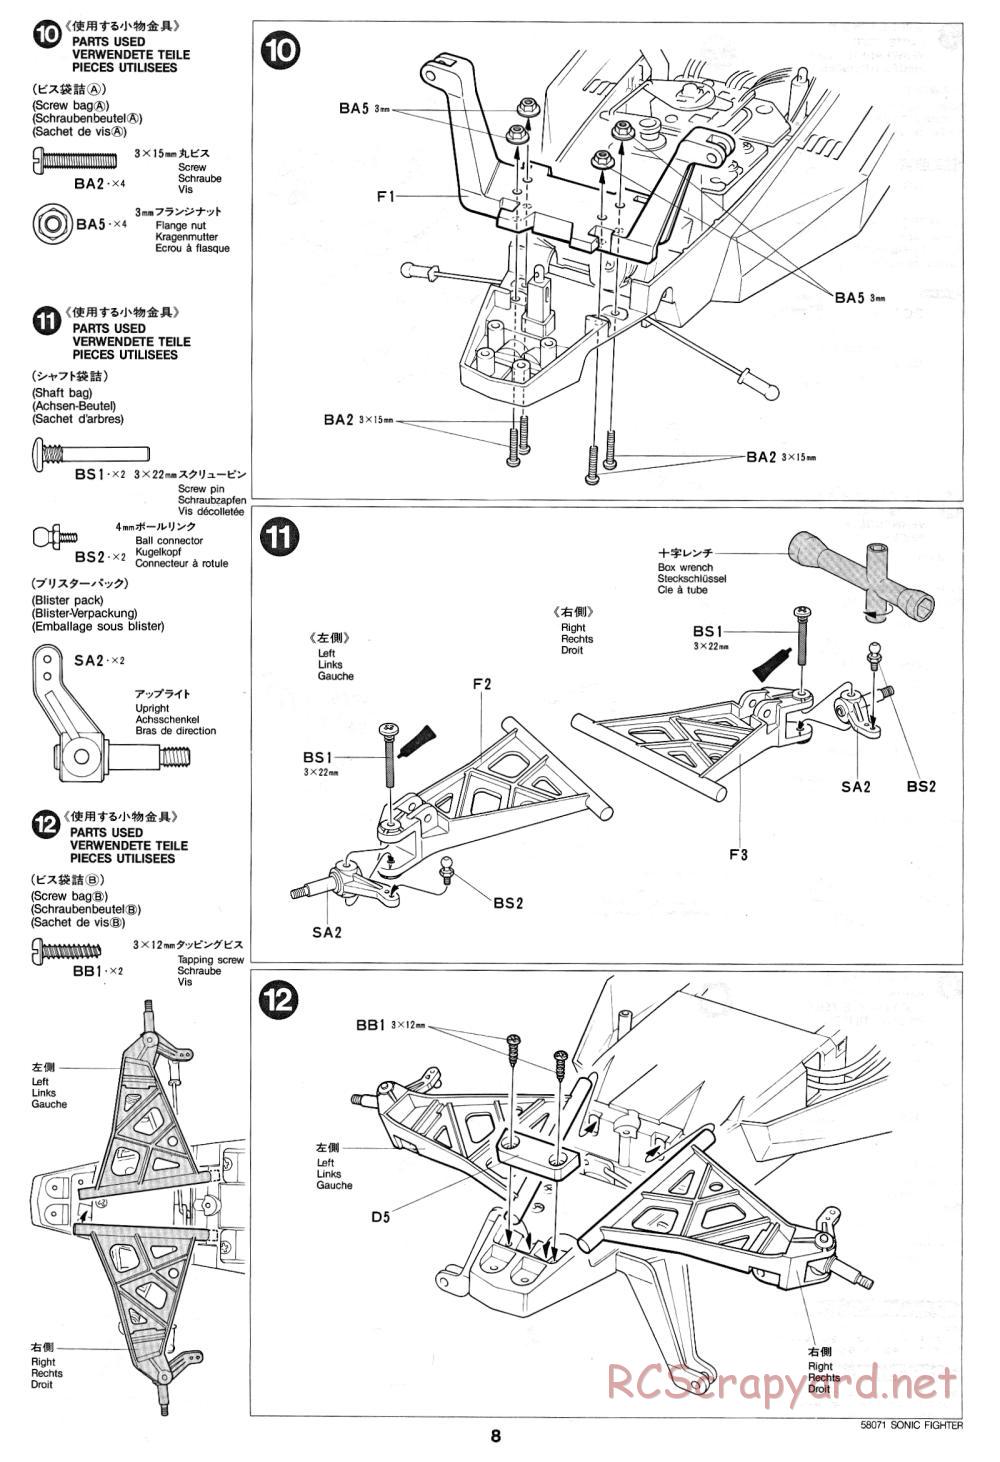 Tamiya - Sonic Fighter - 58071 - Manual - Page 8